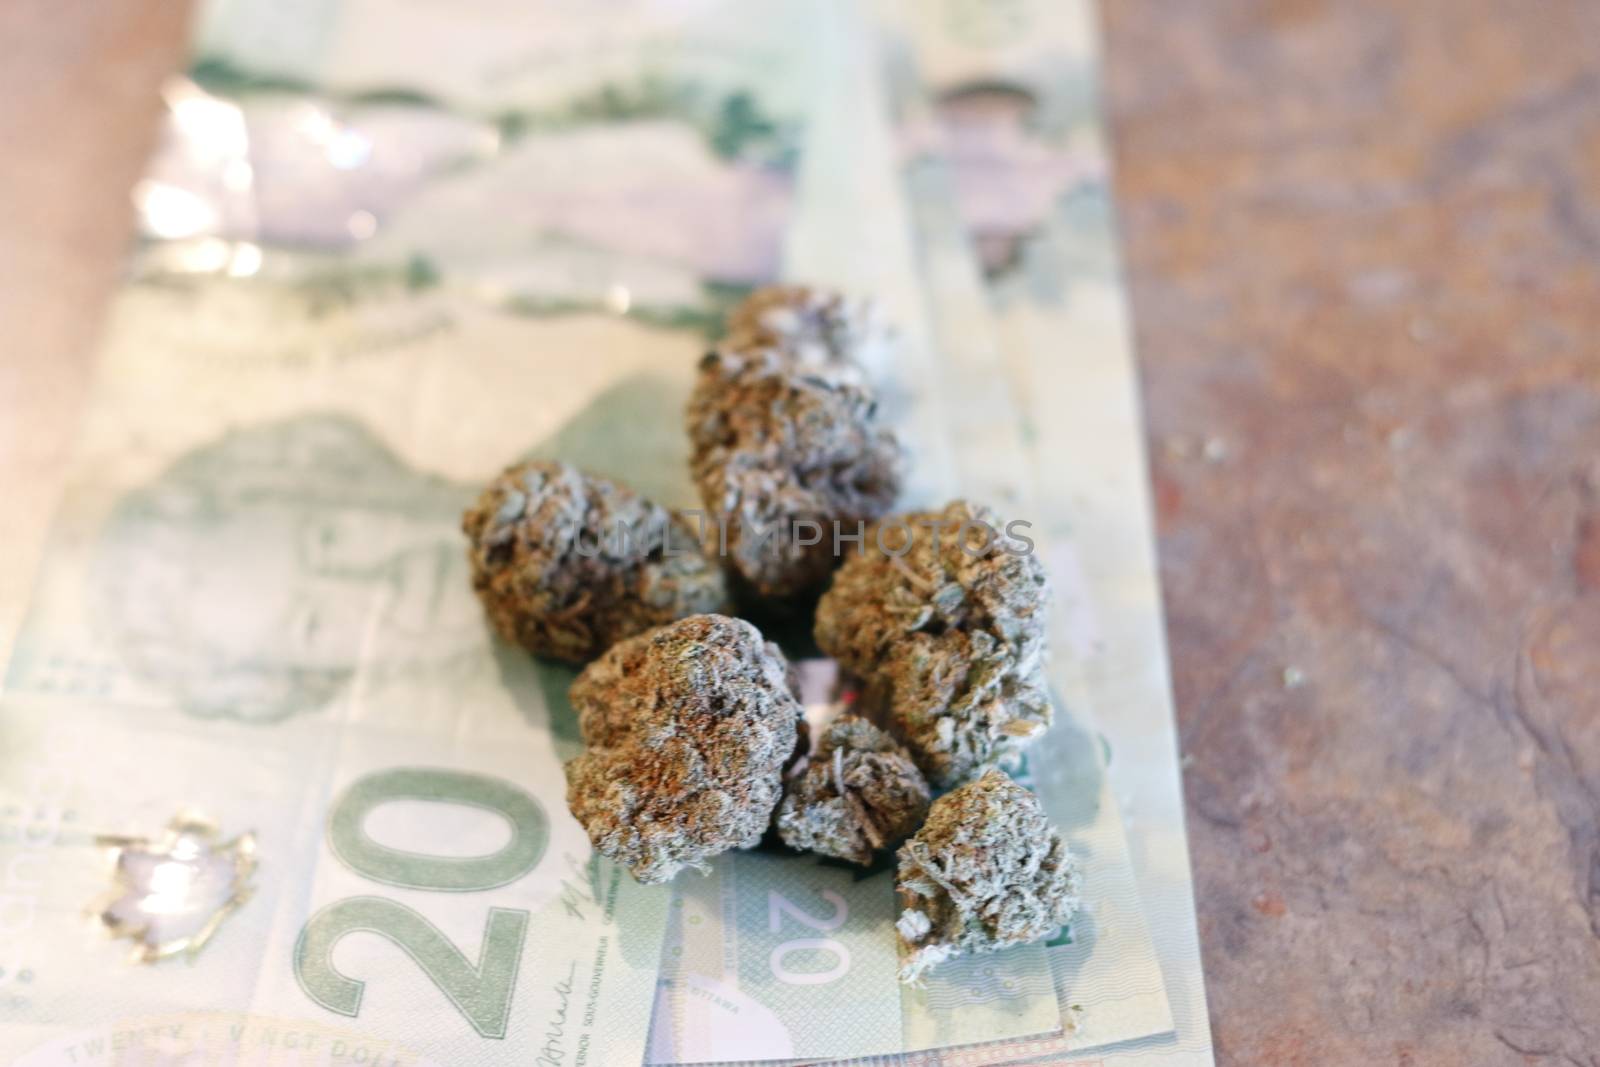 marijuana and canadian twenty dollar bills. Concept of marijuana and economy by mynewturtle1